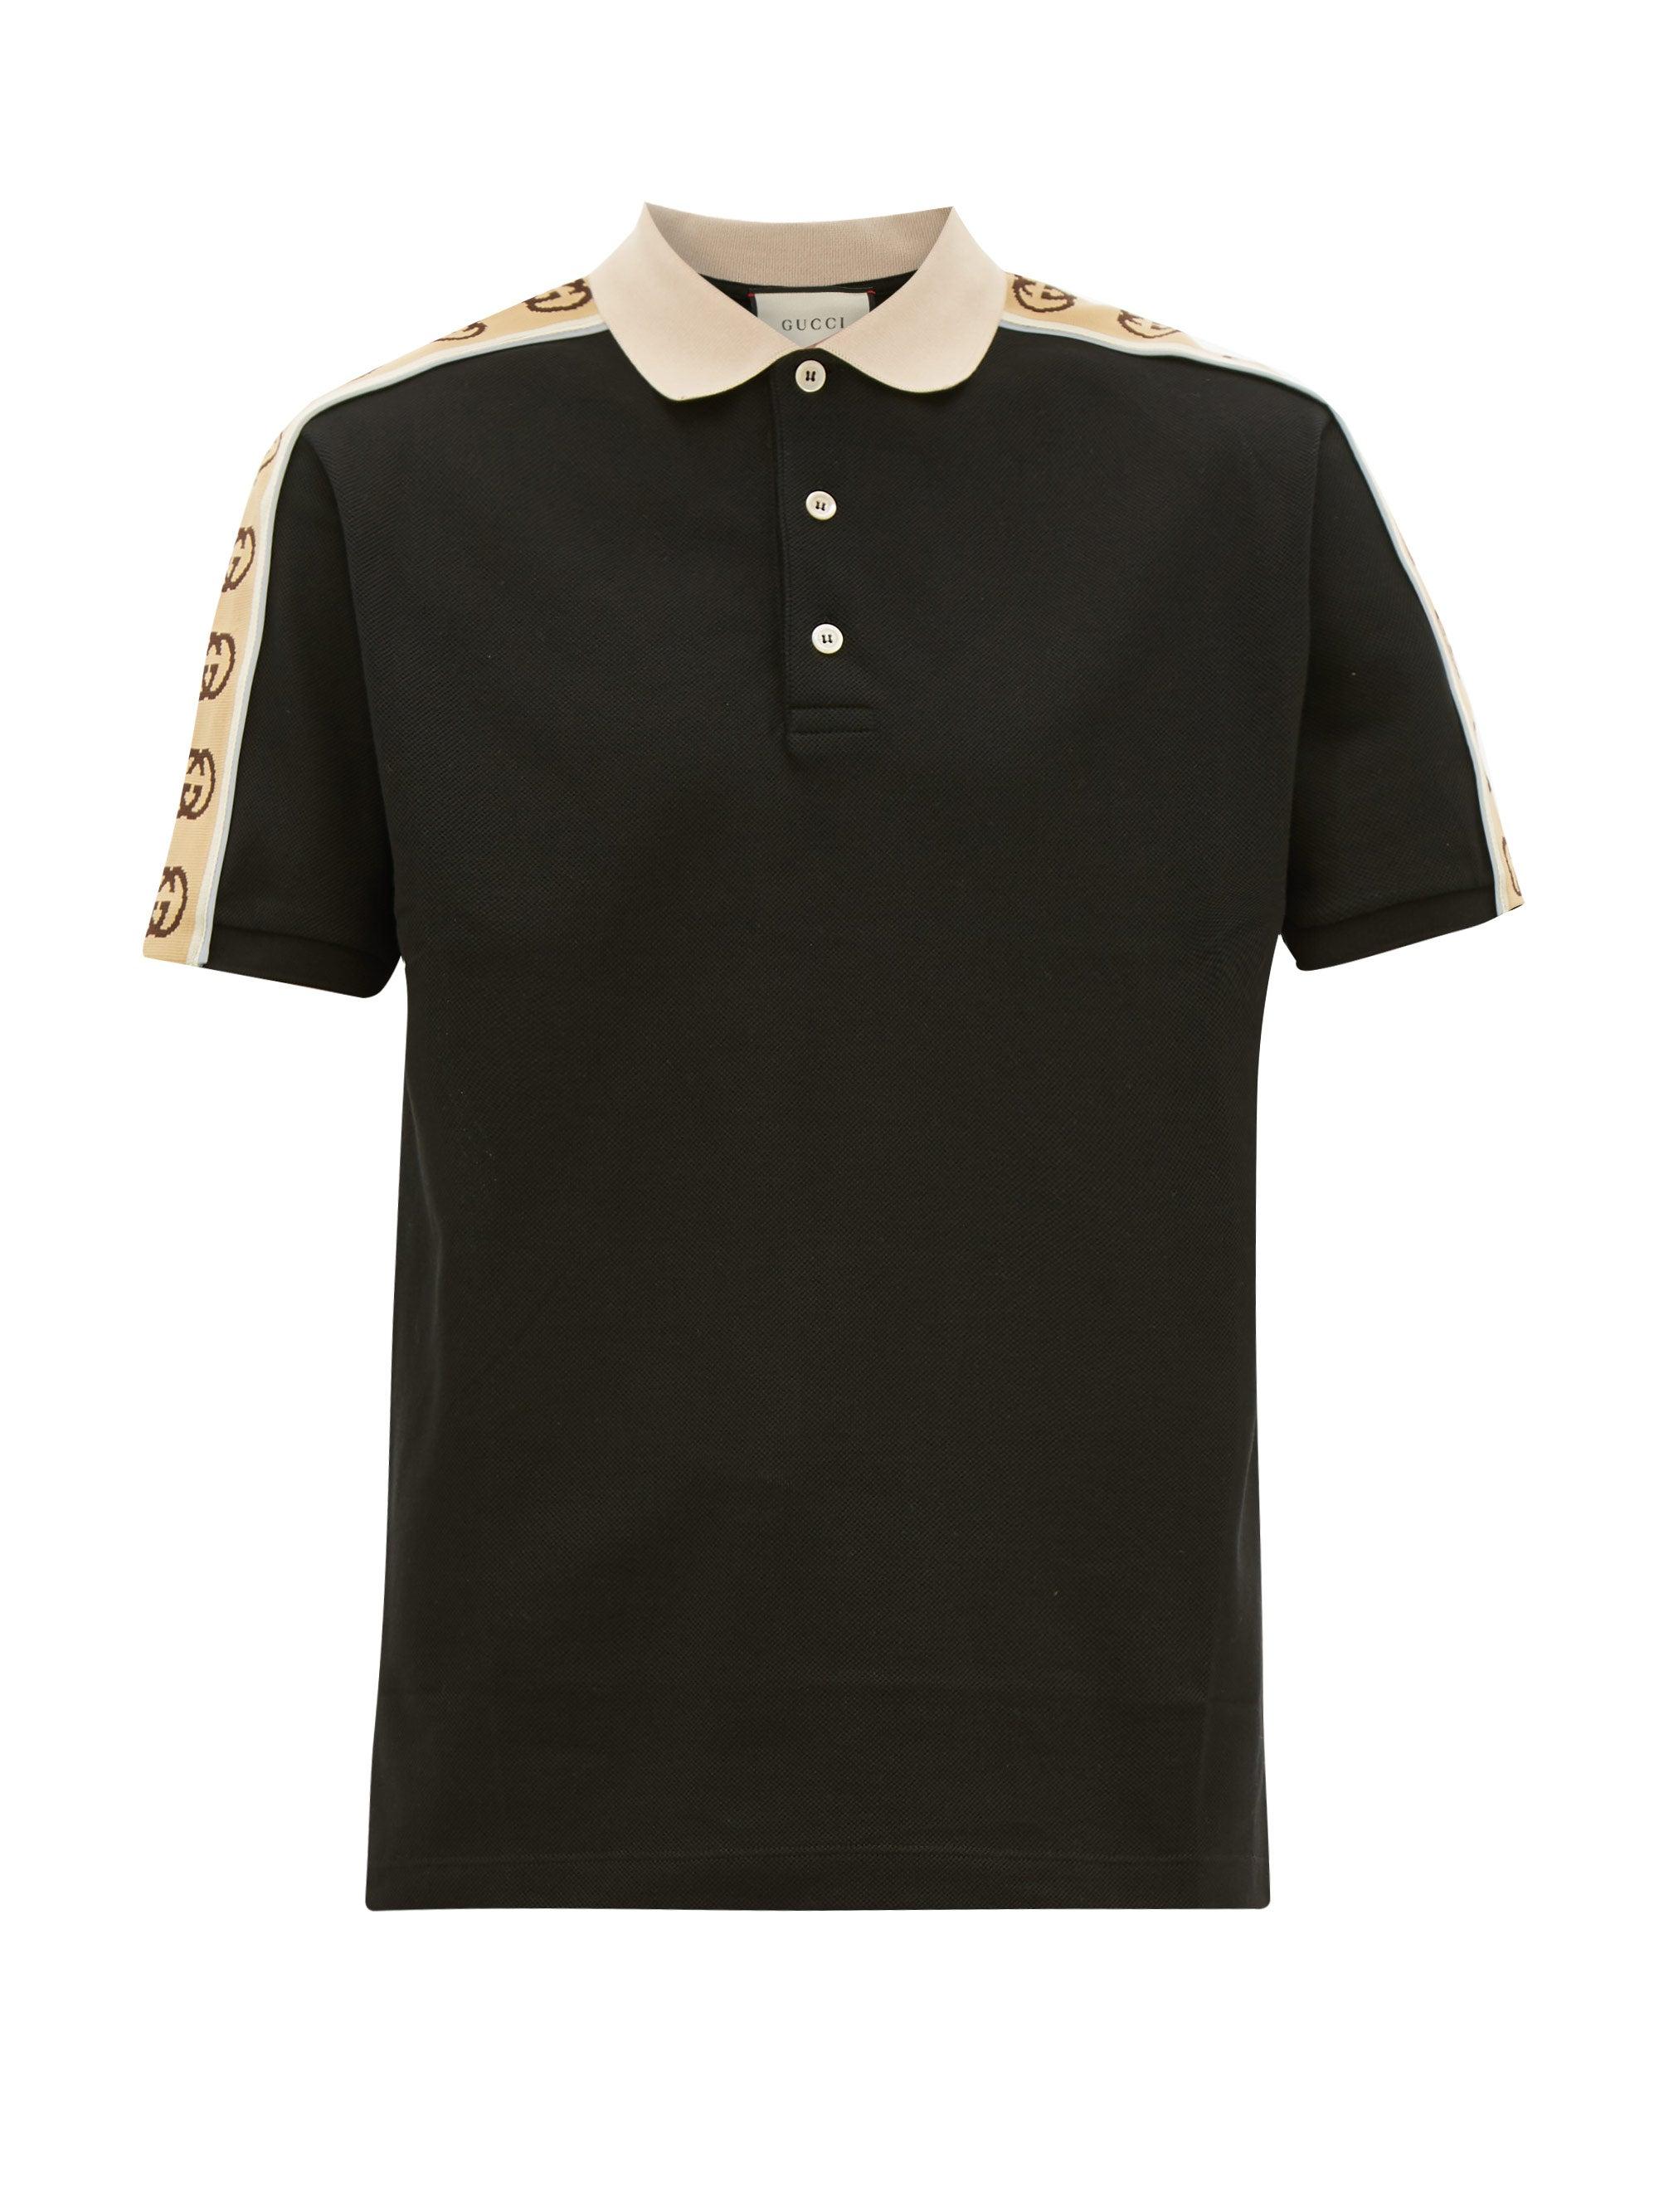 Gucci Logo Stripe Cotton-piqué Polo Shirt in Black for Men - Lyst